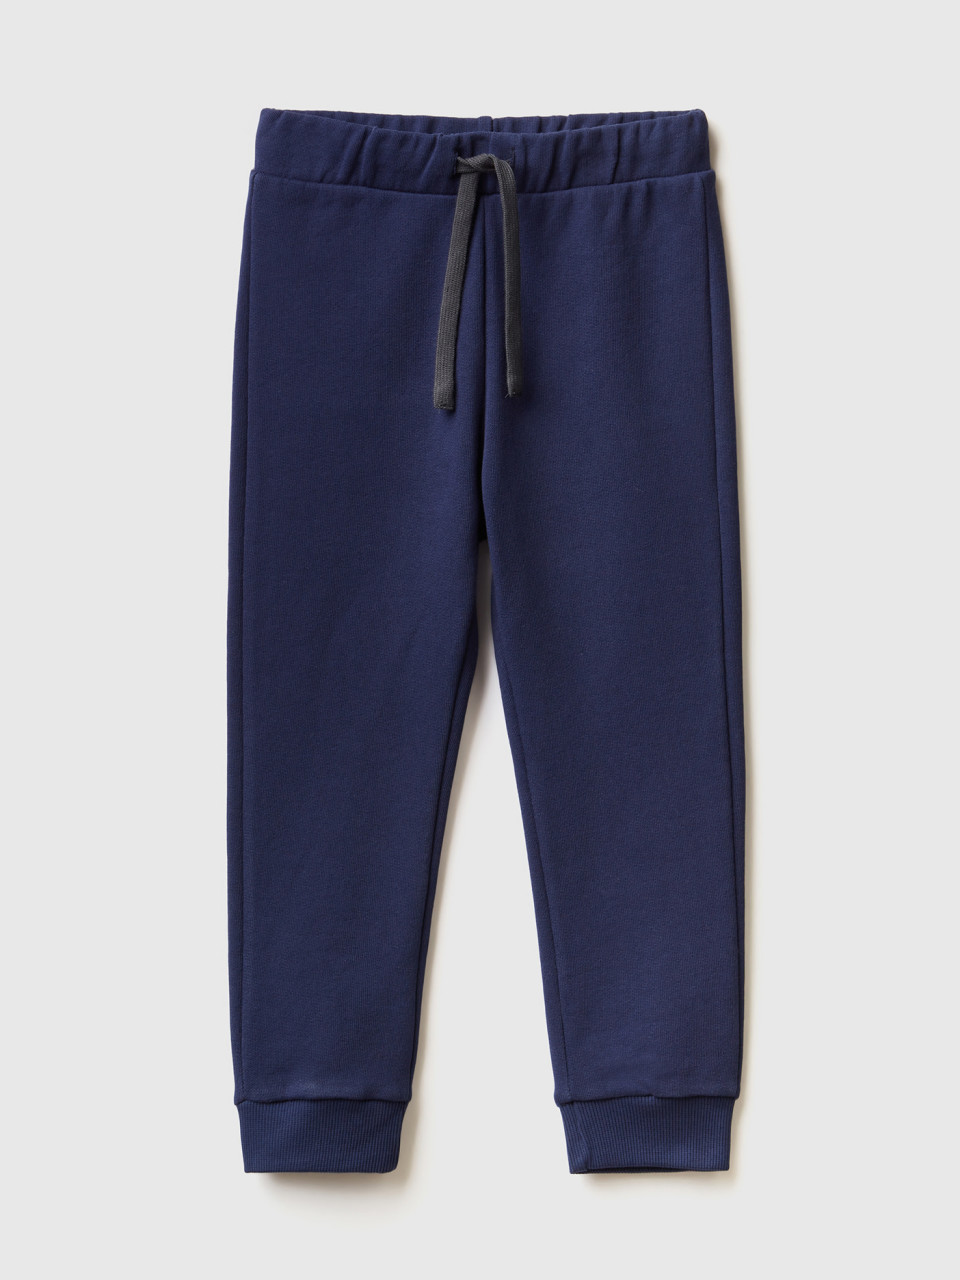 Benetton, Sweatpants With Pocket, Dark Blue, Kids